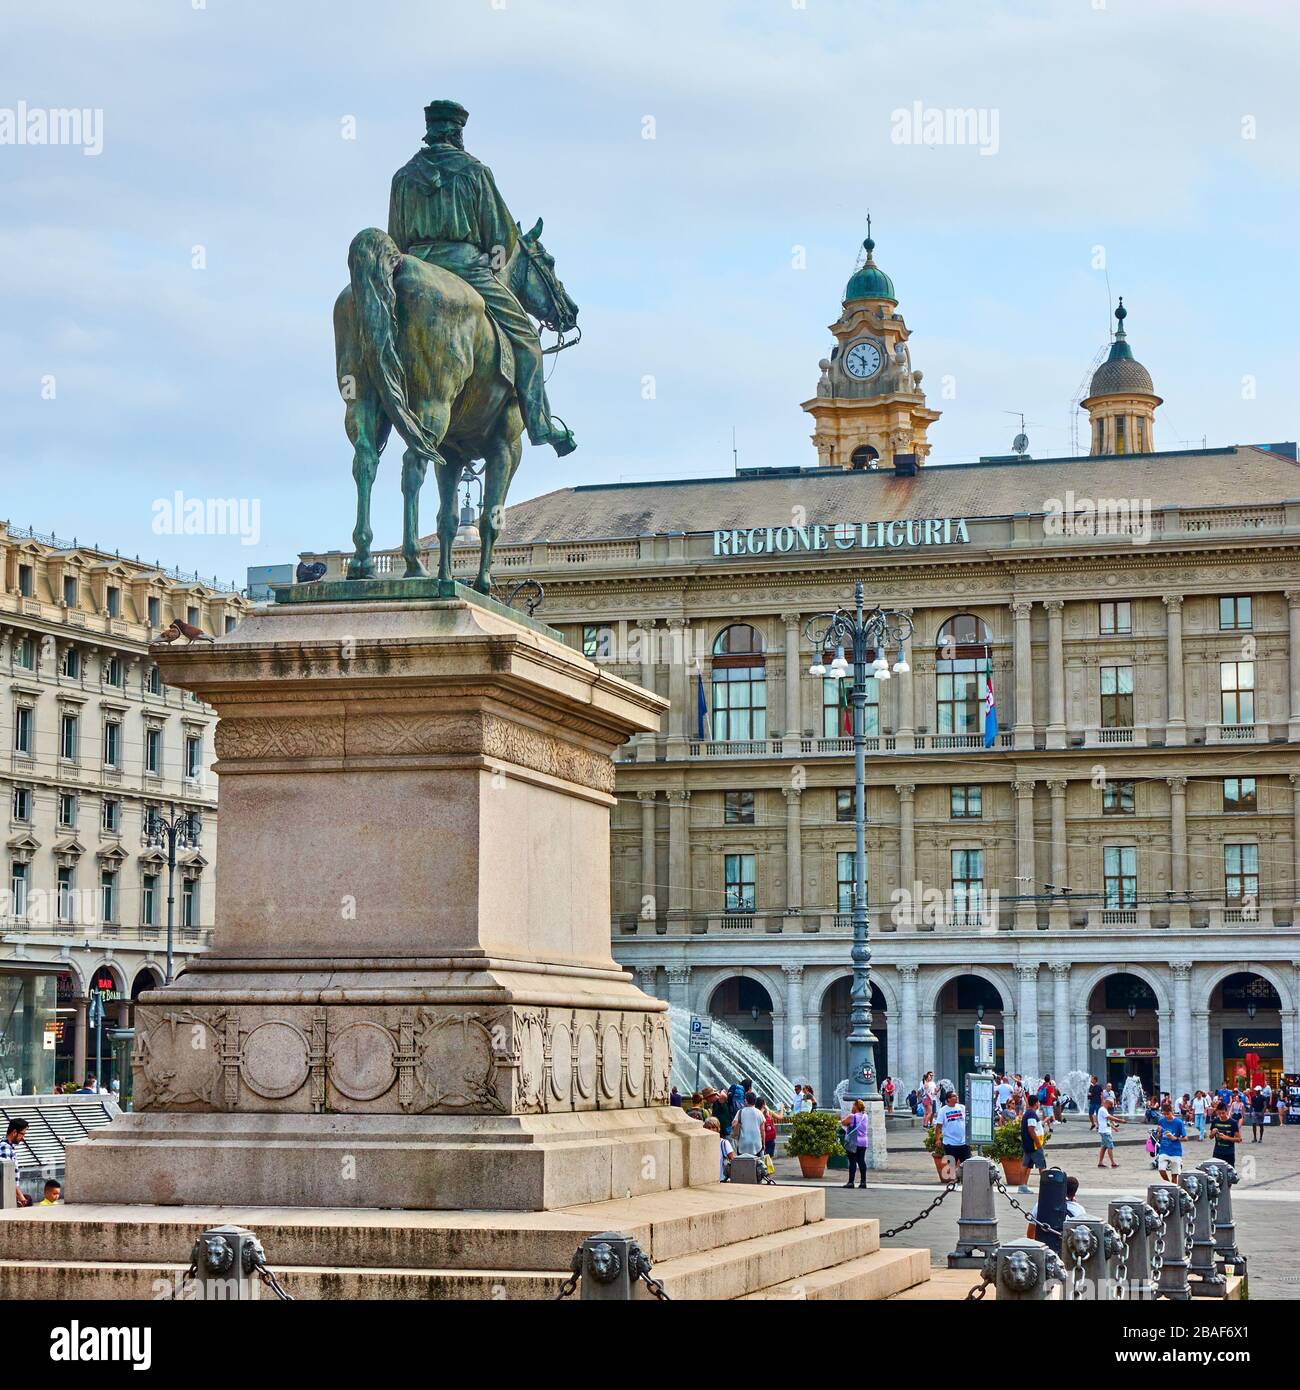 Genoa, Italy - July 6, 2019: Statue of Giuseppe Garibaldi on De Ferrari square and walking people in Genoa Stock Photo